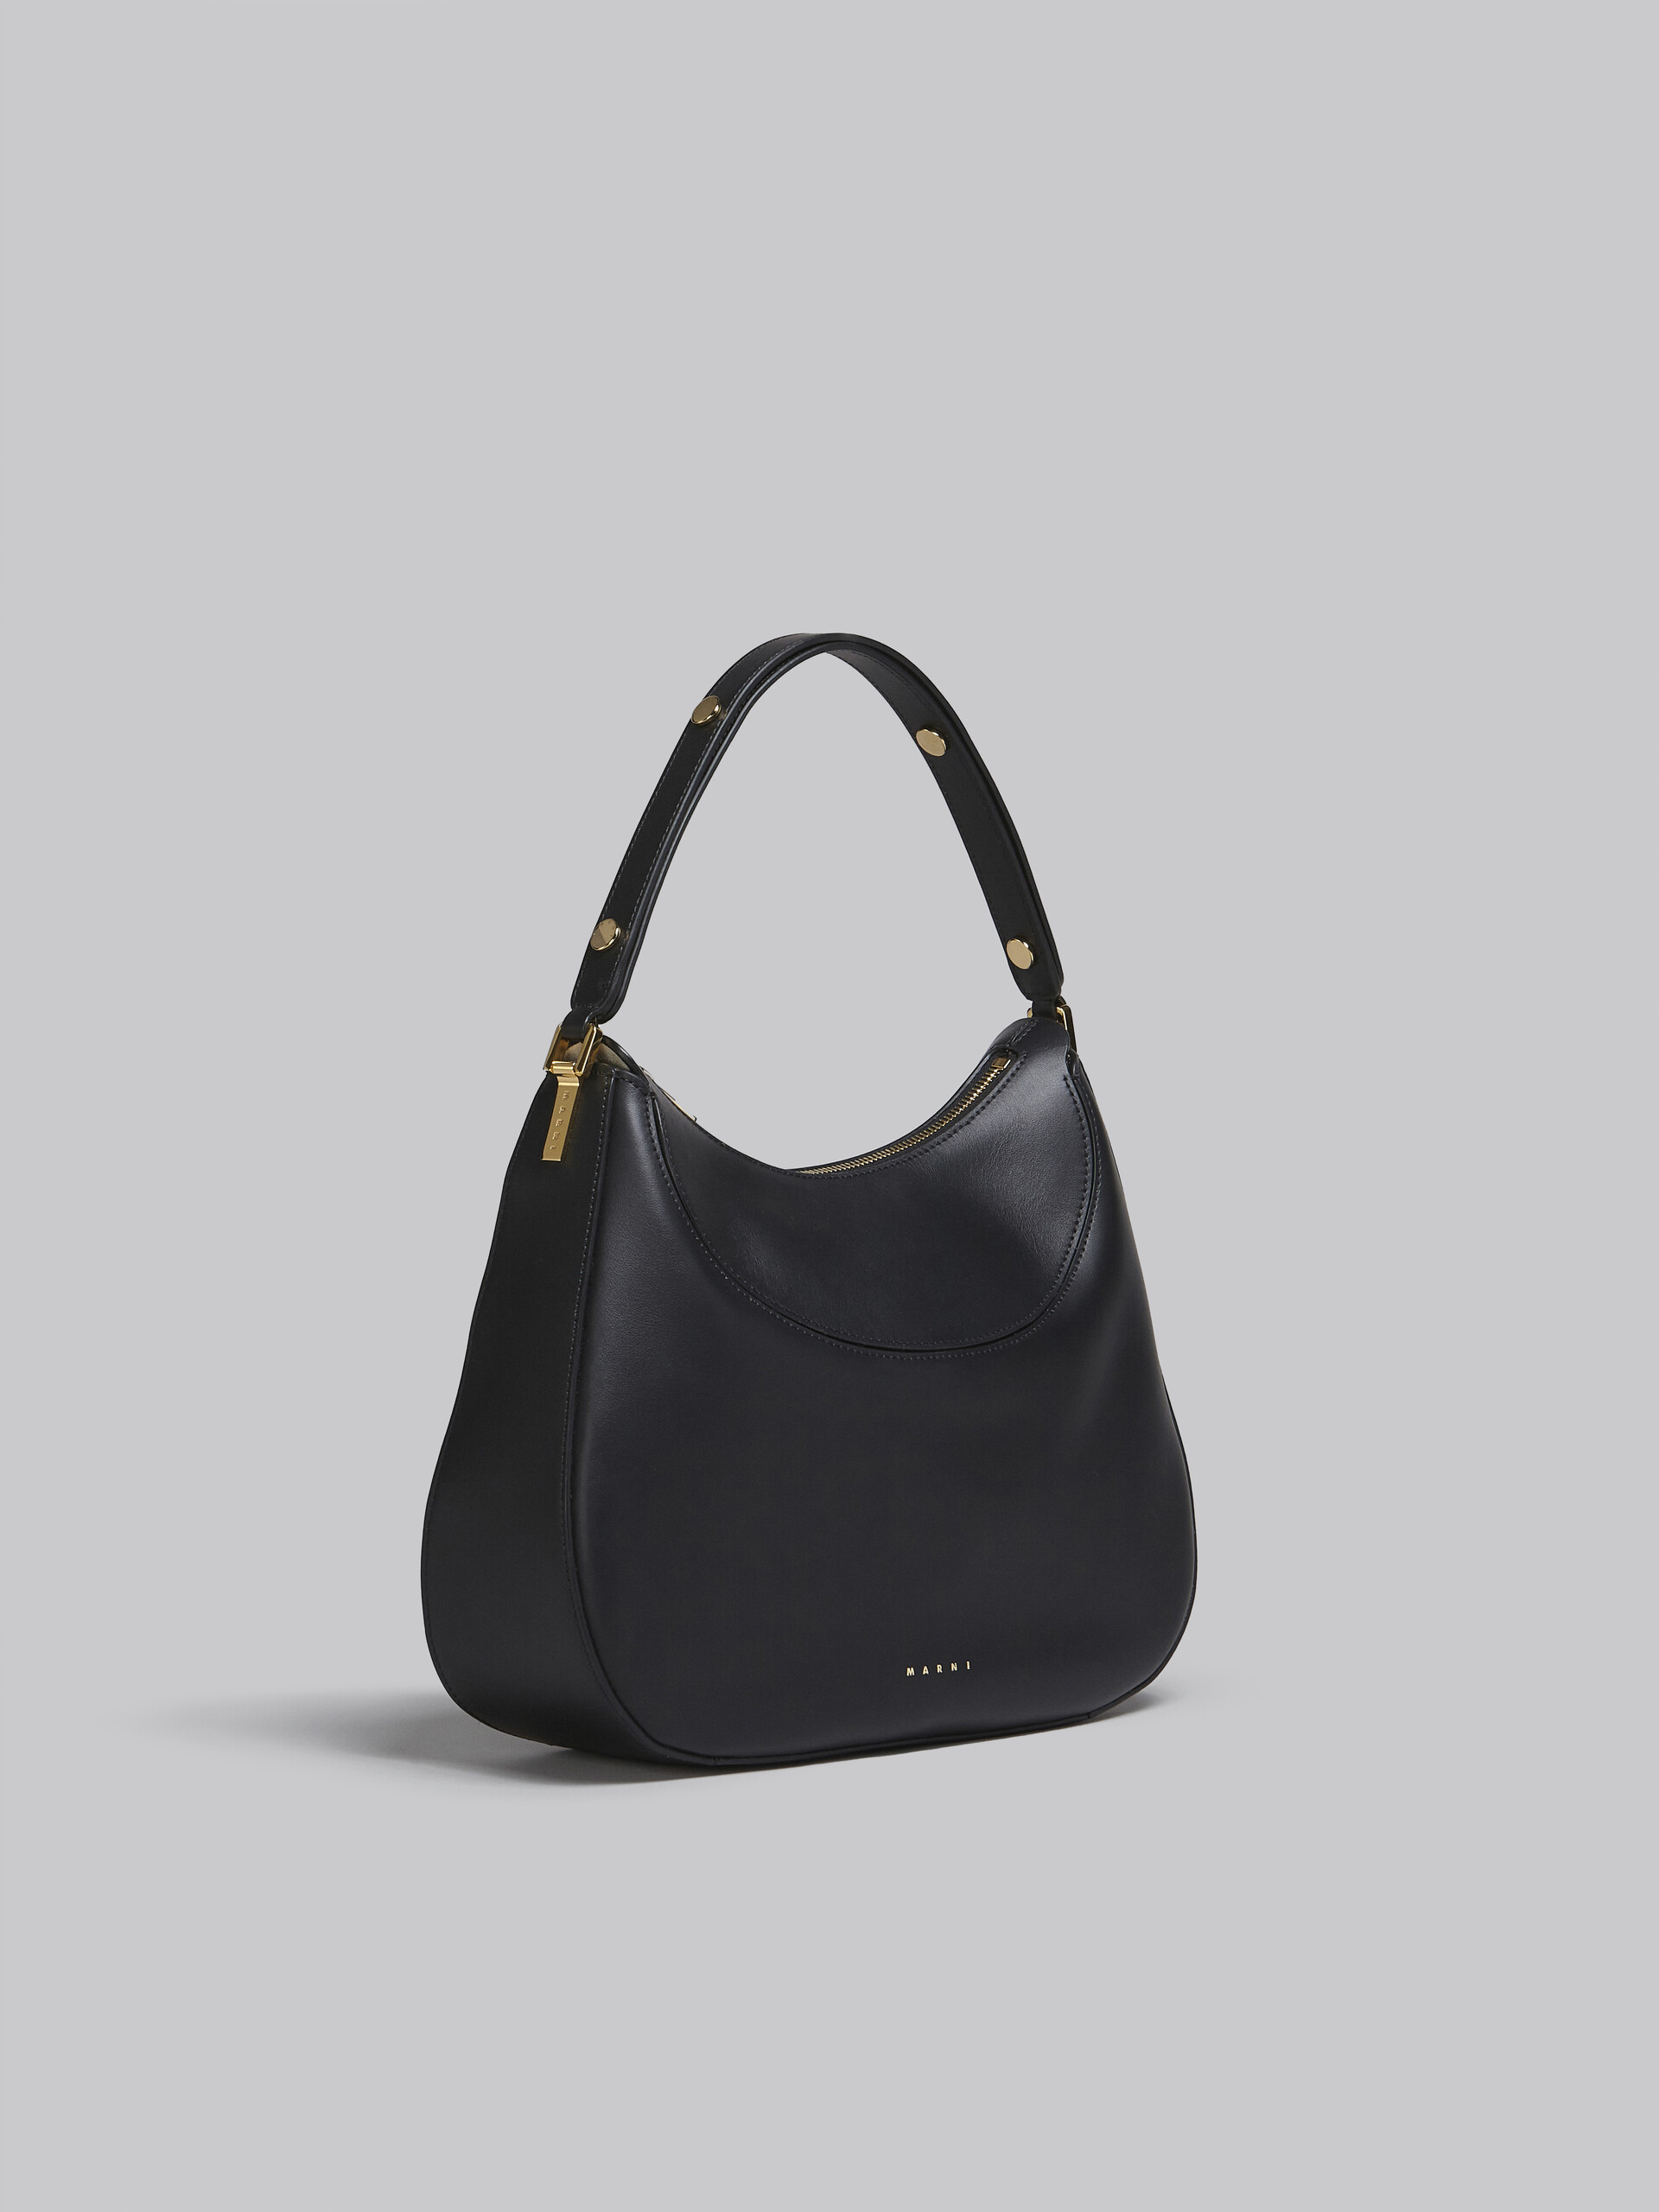 Milano large bag in black leather - Handbags - Image 6